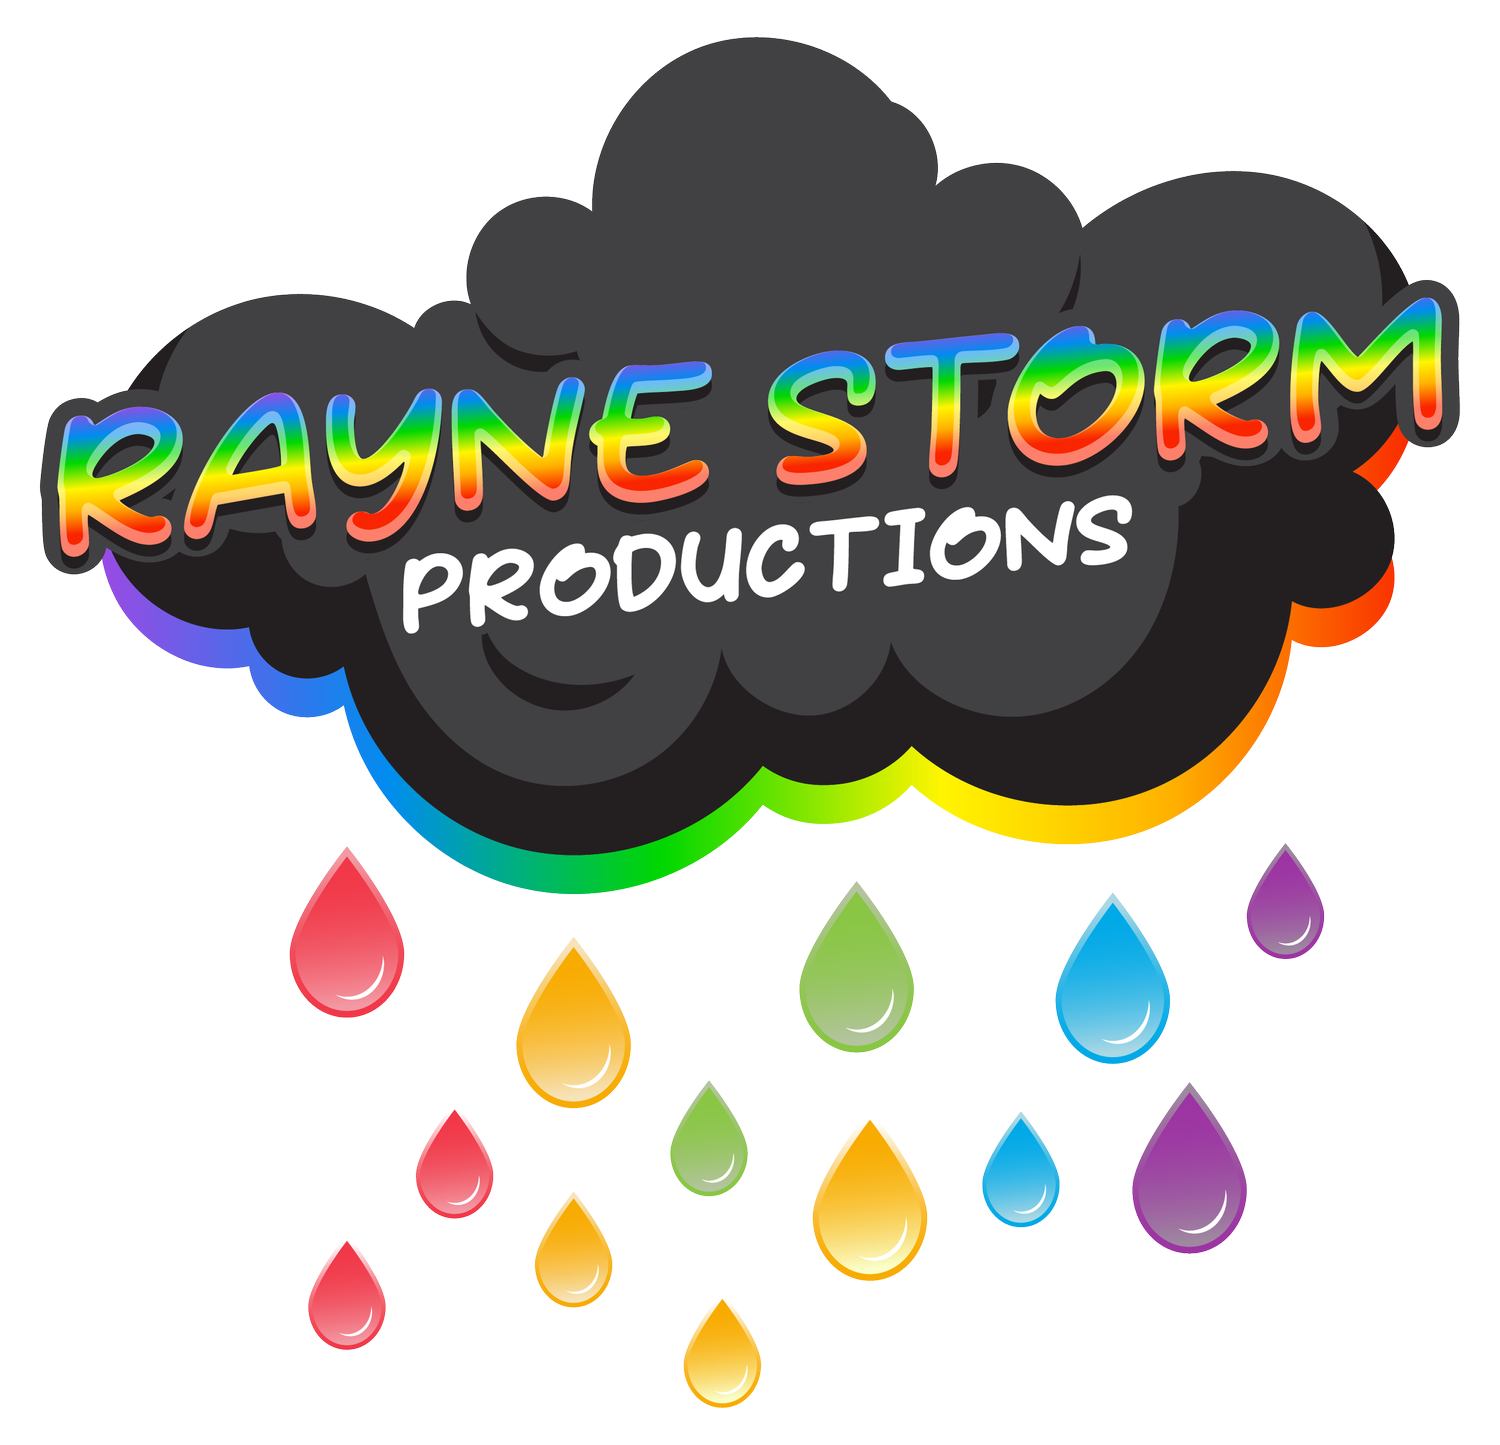 Raynestorm Productions